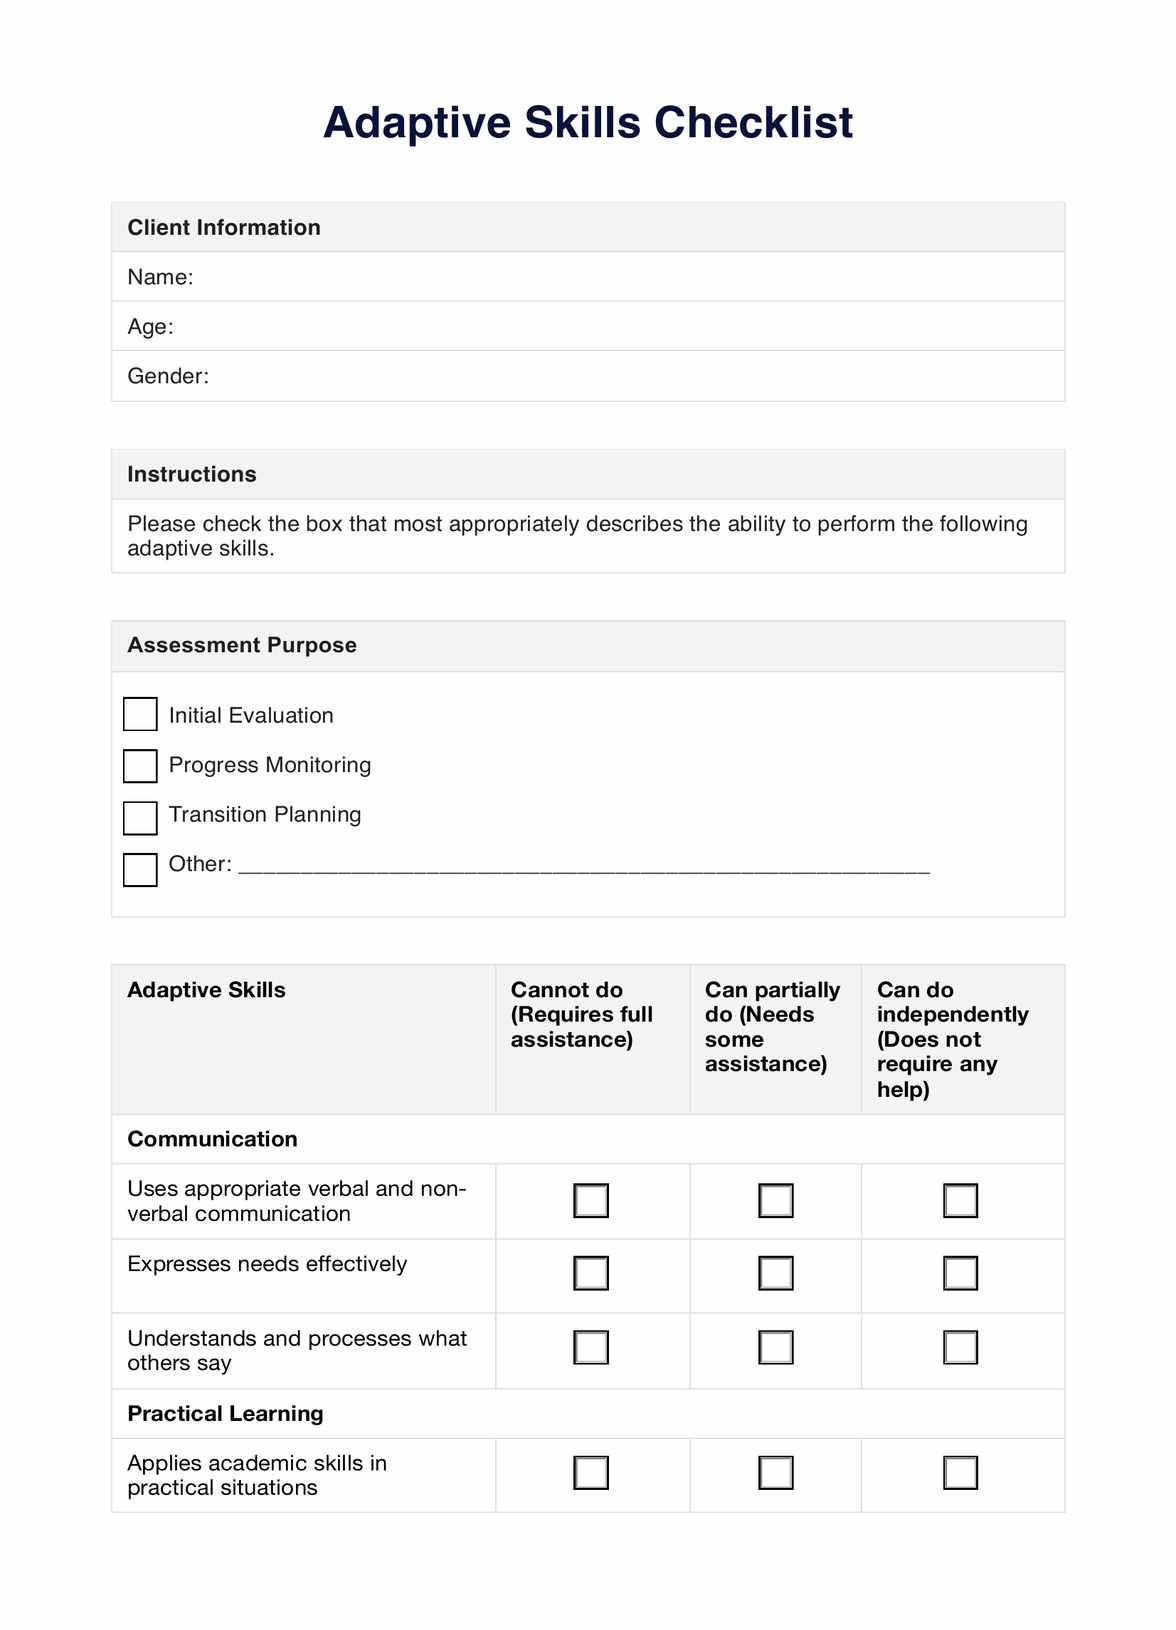 Adaptive Skills Checklist PDF Example